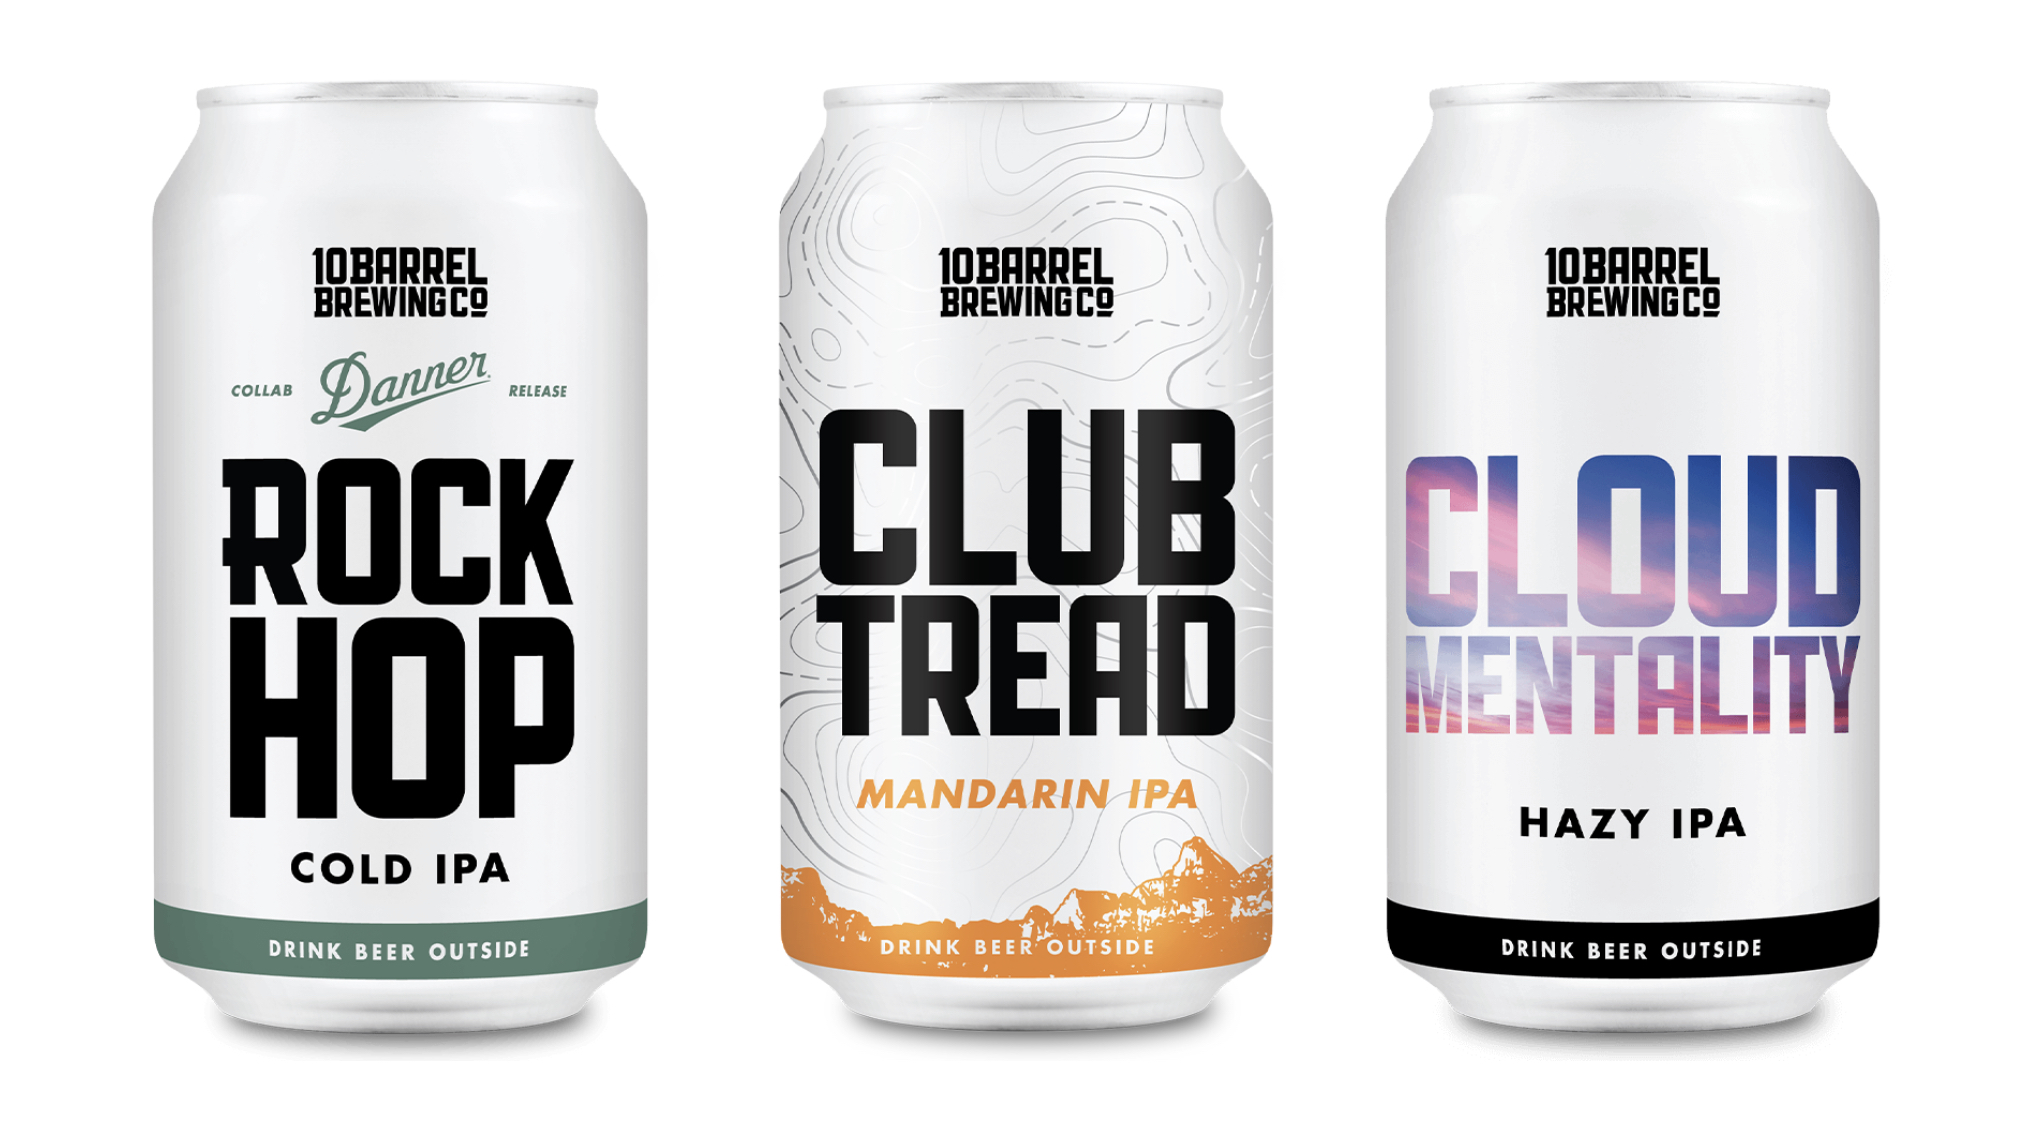 10 Barrel Brewing Rock Hop Cold IPA, Club Tread Mandarin IPA and Cloud Mentality Hazy IPA